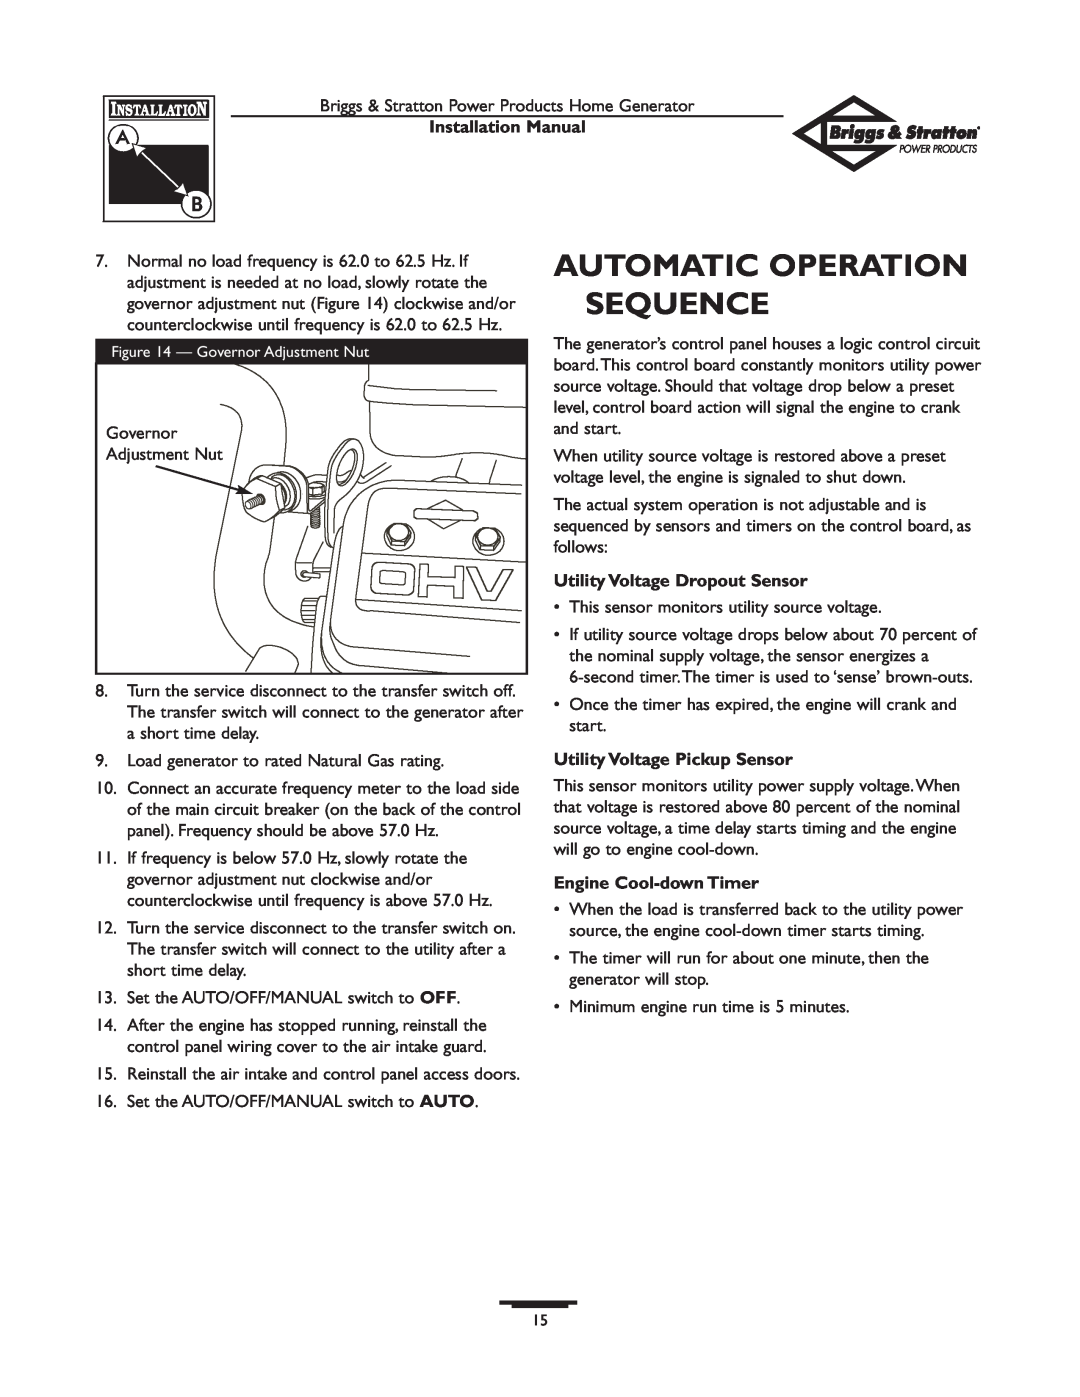 Briggs & Stratton 01938-0 Automatic Operation Sequence, Utility Voltage Dropout Sensor, Utility Voltage Pickup Sensor 